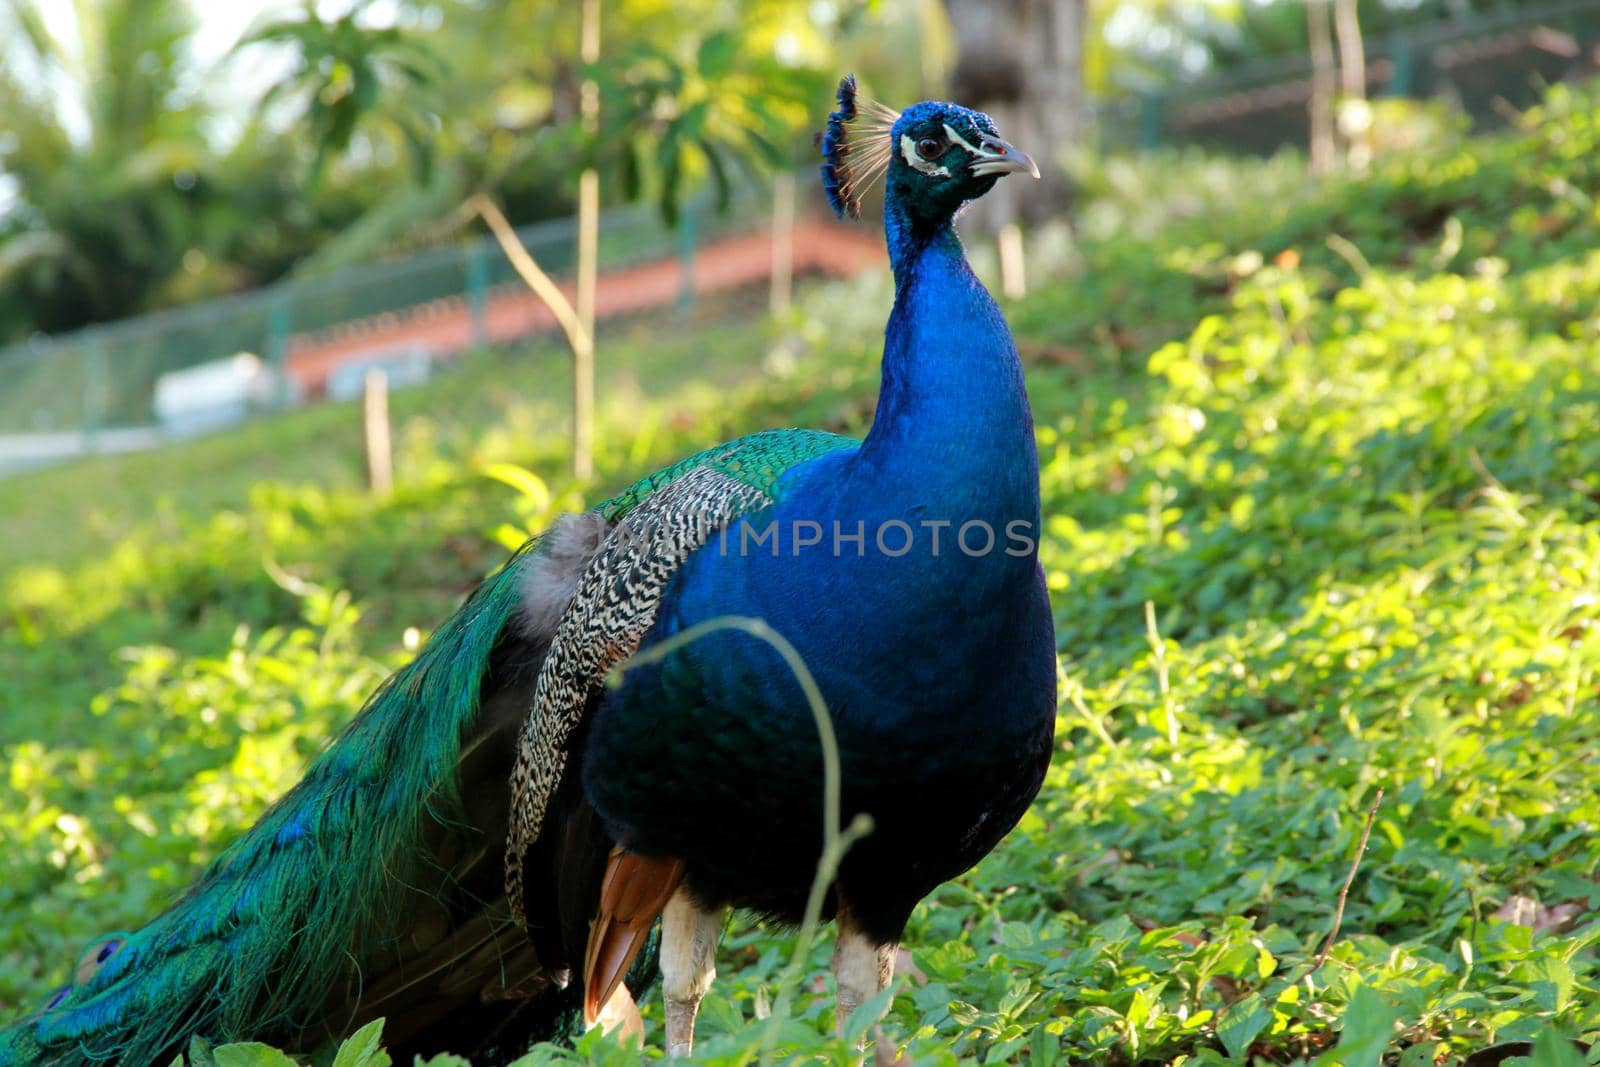 salvador, bahia / brazil - september 22, 2012: Peacock animal is seen at the Salvad